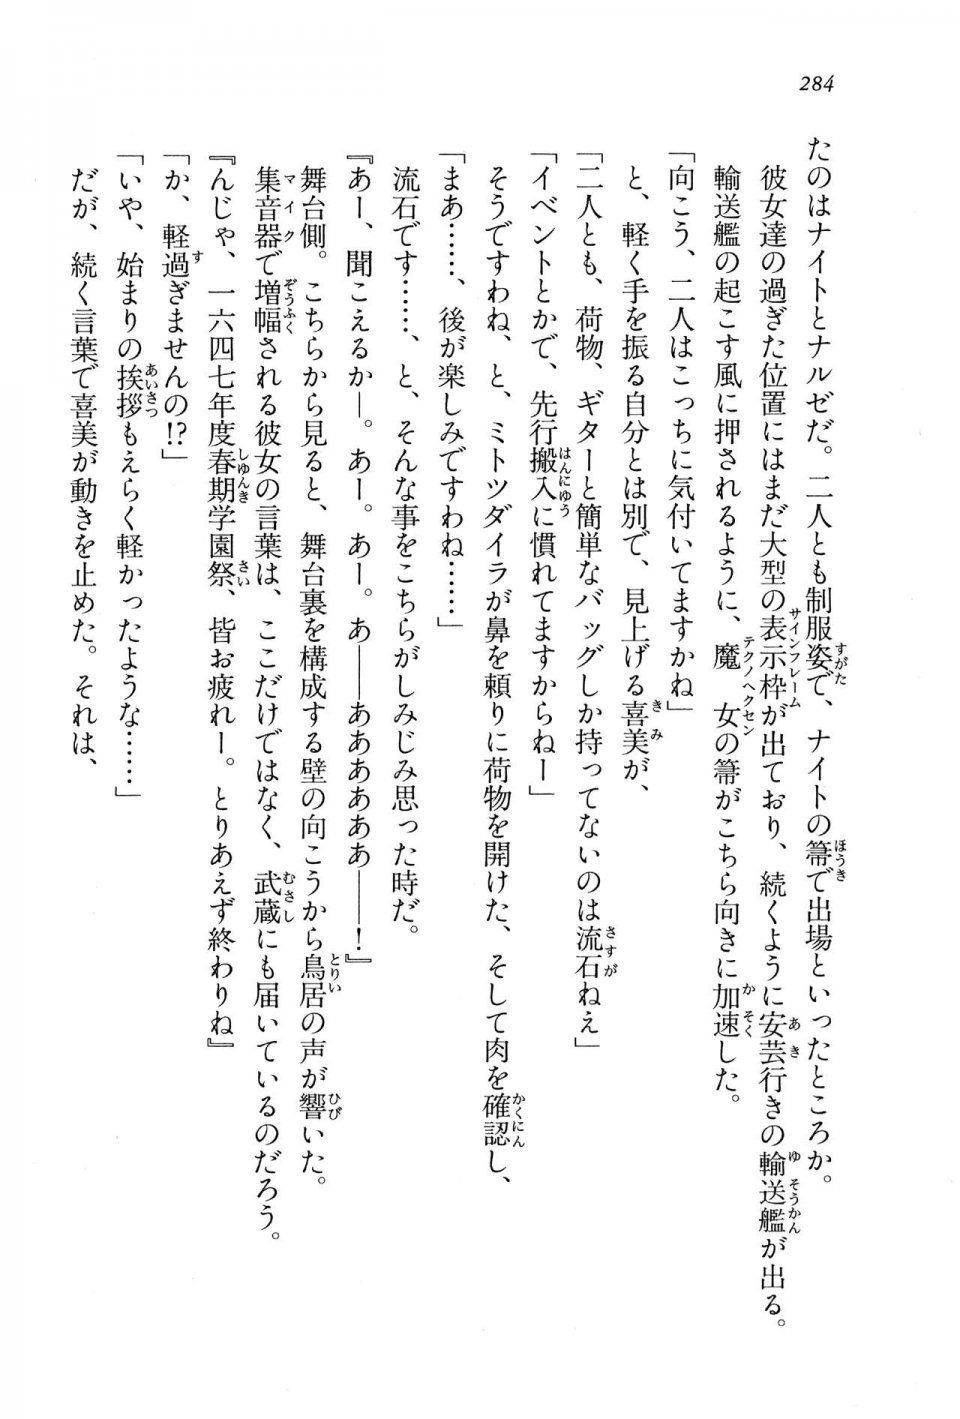 Kyoukai Senjou no Horizon BD Special Mininovel Vol 8(4B) - Photo #288